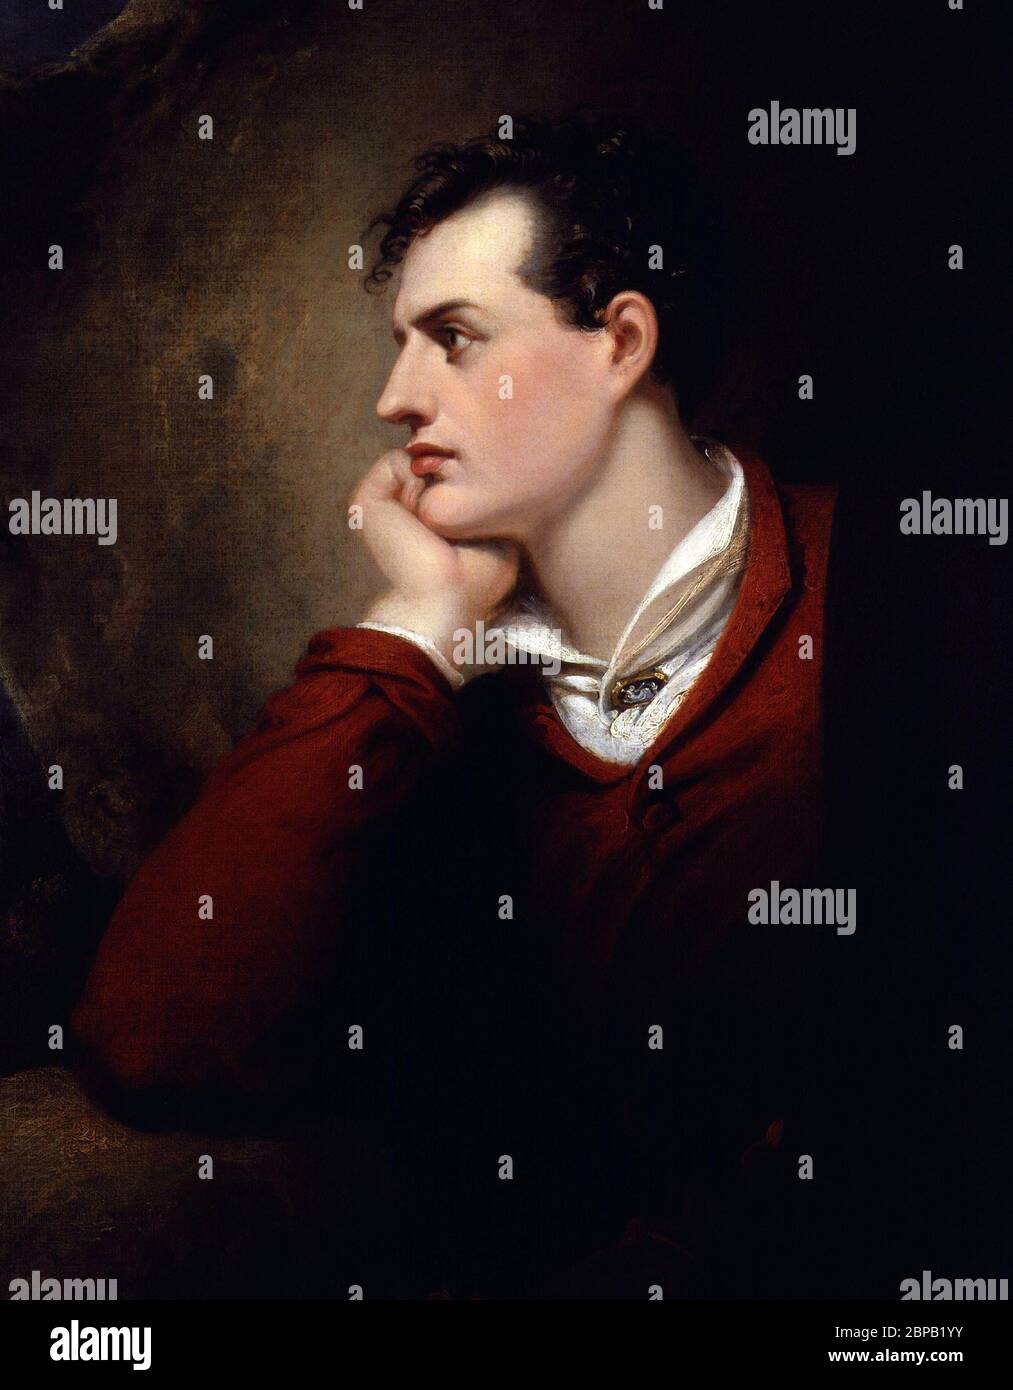 Lord Byron. Porträt von George Gordon Byron, 6. Baron Byron (1788-1824) von Richard Westall, Öl auf Leinwand, 1813 Stockfoto